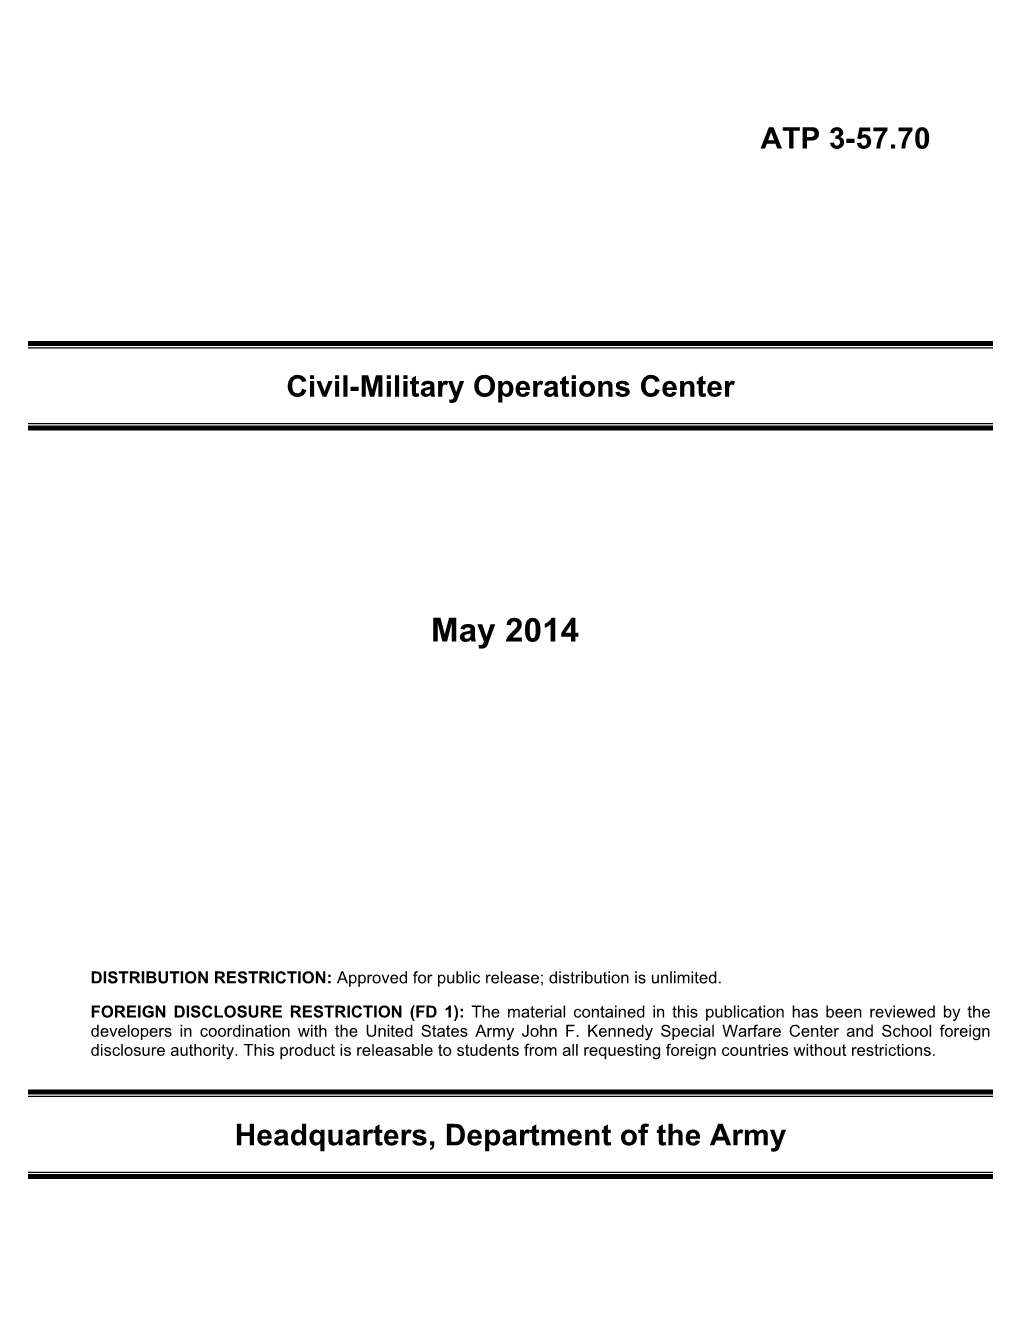 ATP 3-57.70. Civil-Military Operations Center